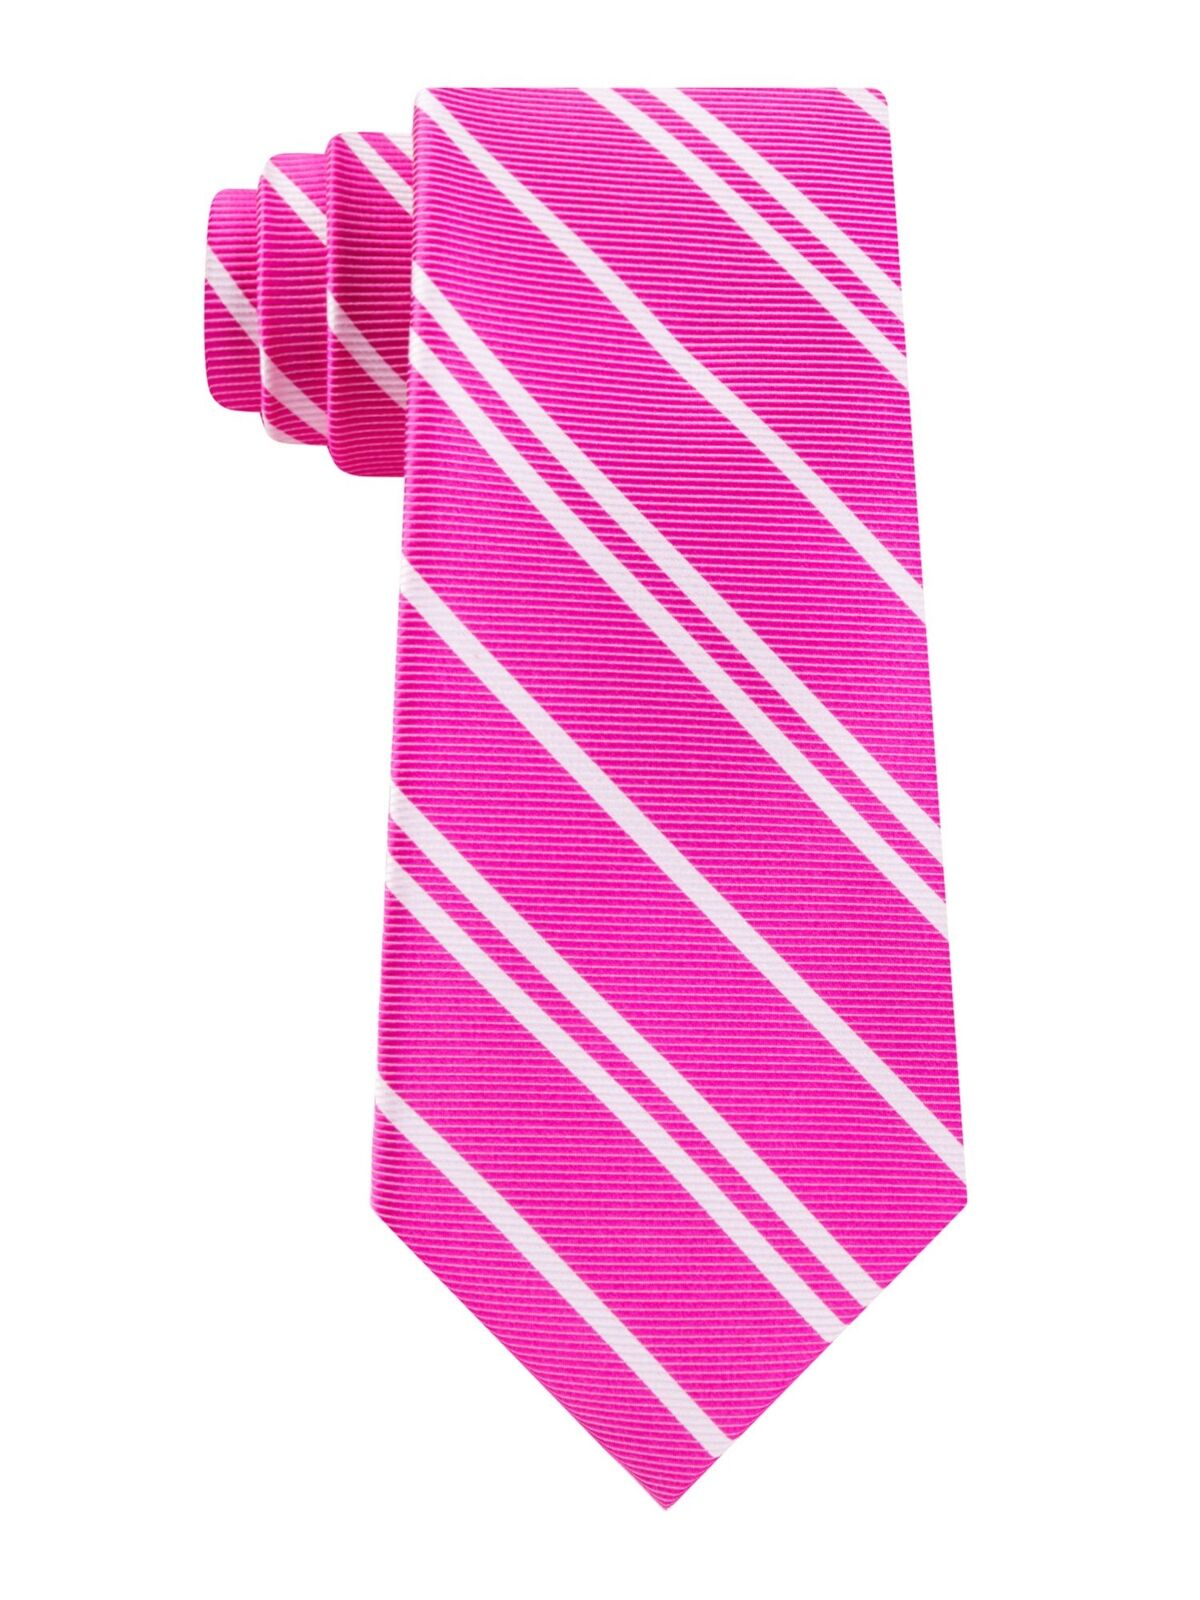 TOMMY HILFIGER Stripe Pink White Men's Classic Tie